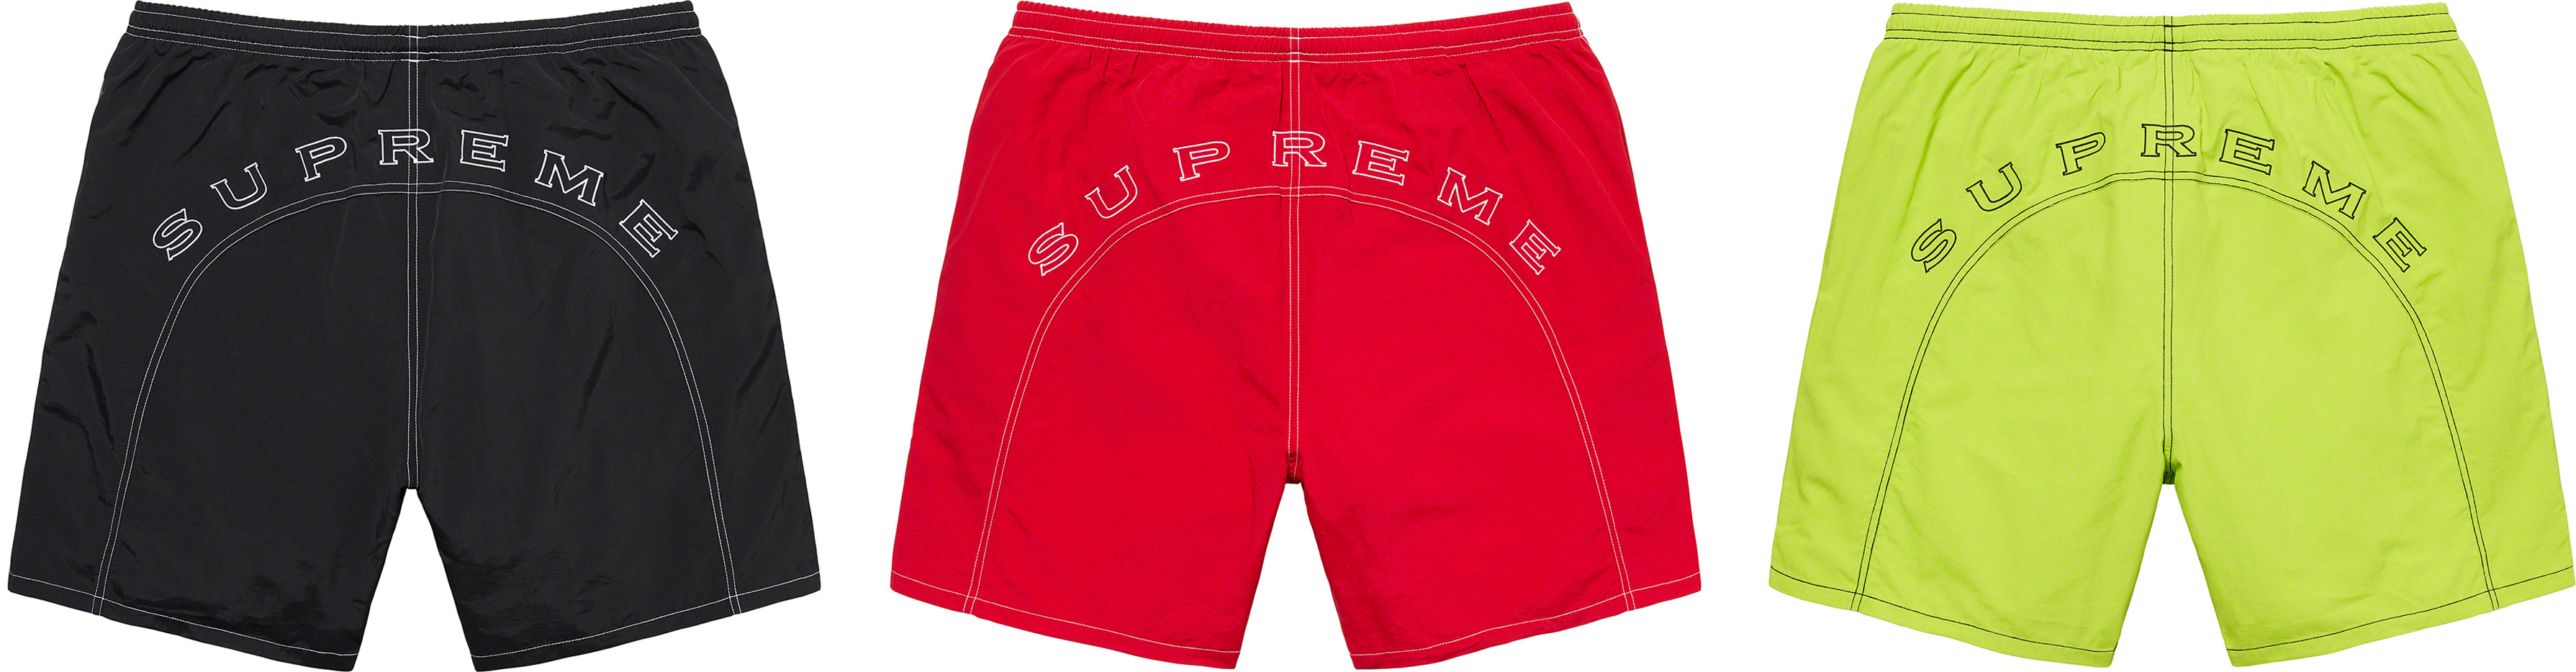 Arc Logo Water Short - spring summer 2020 - Supreme